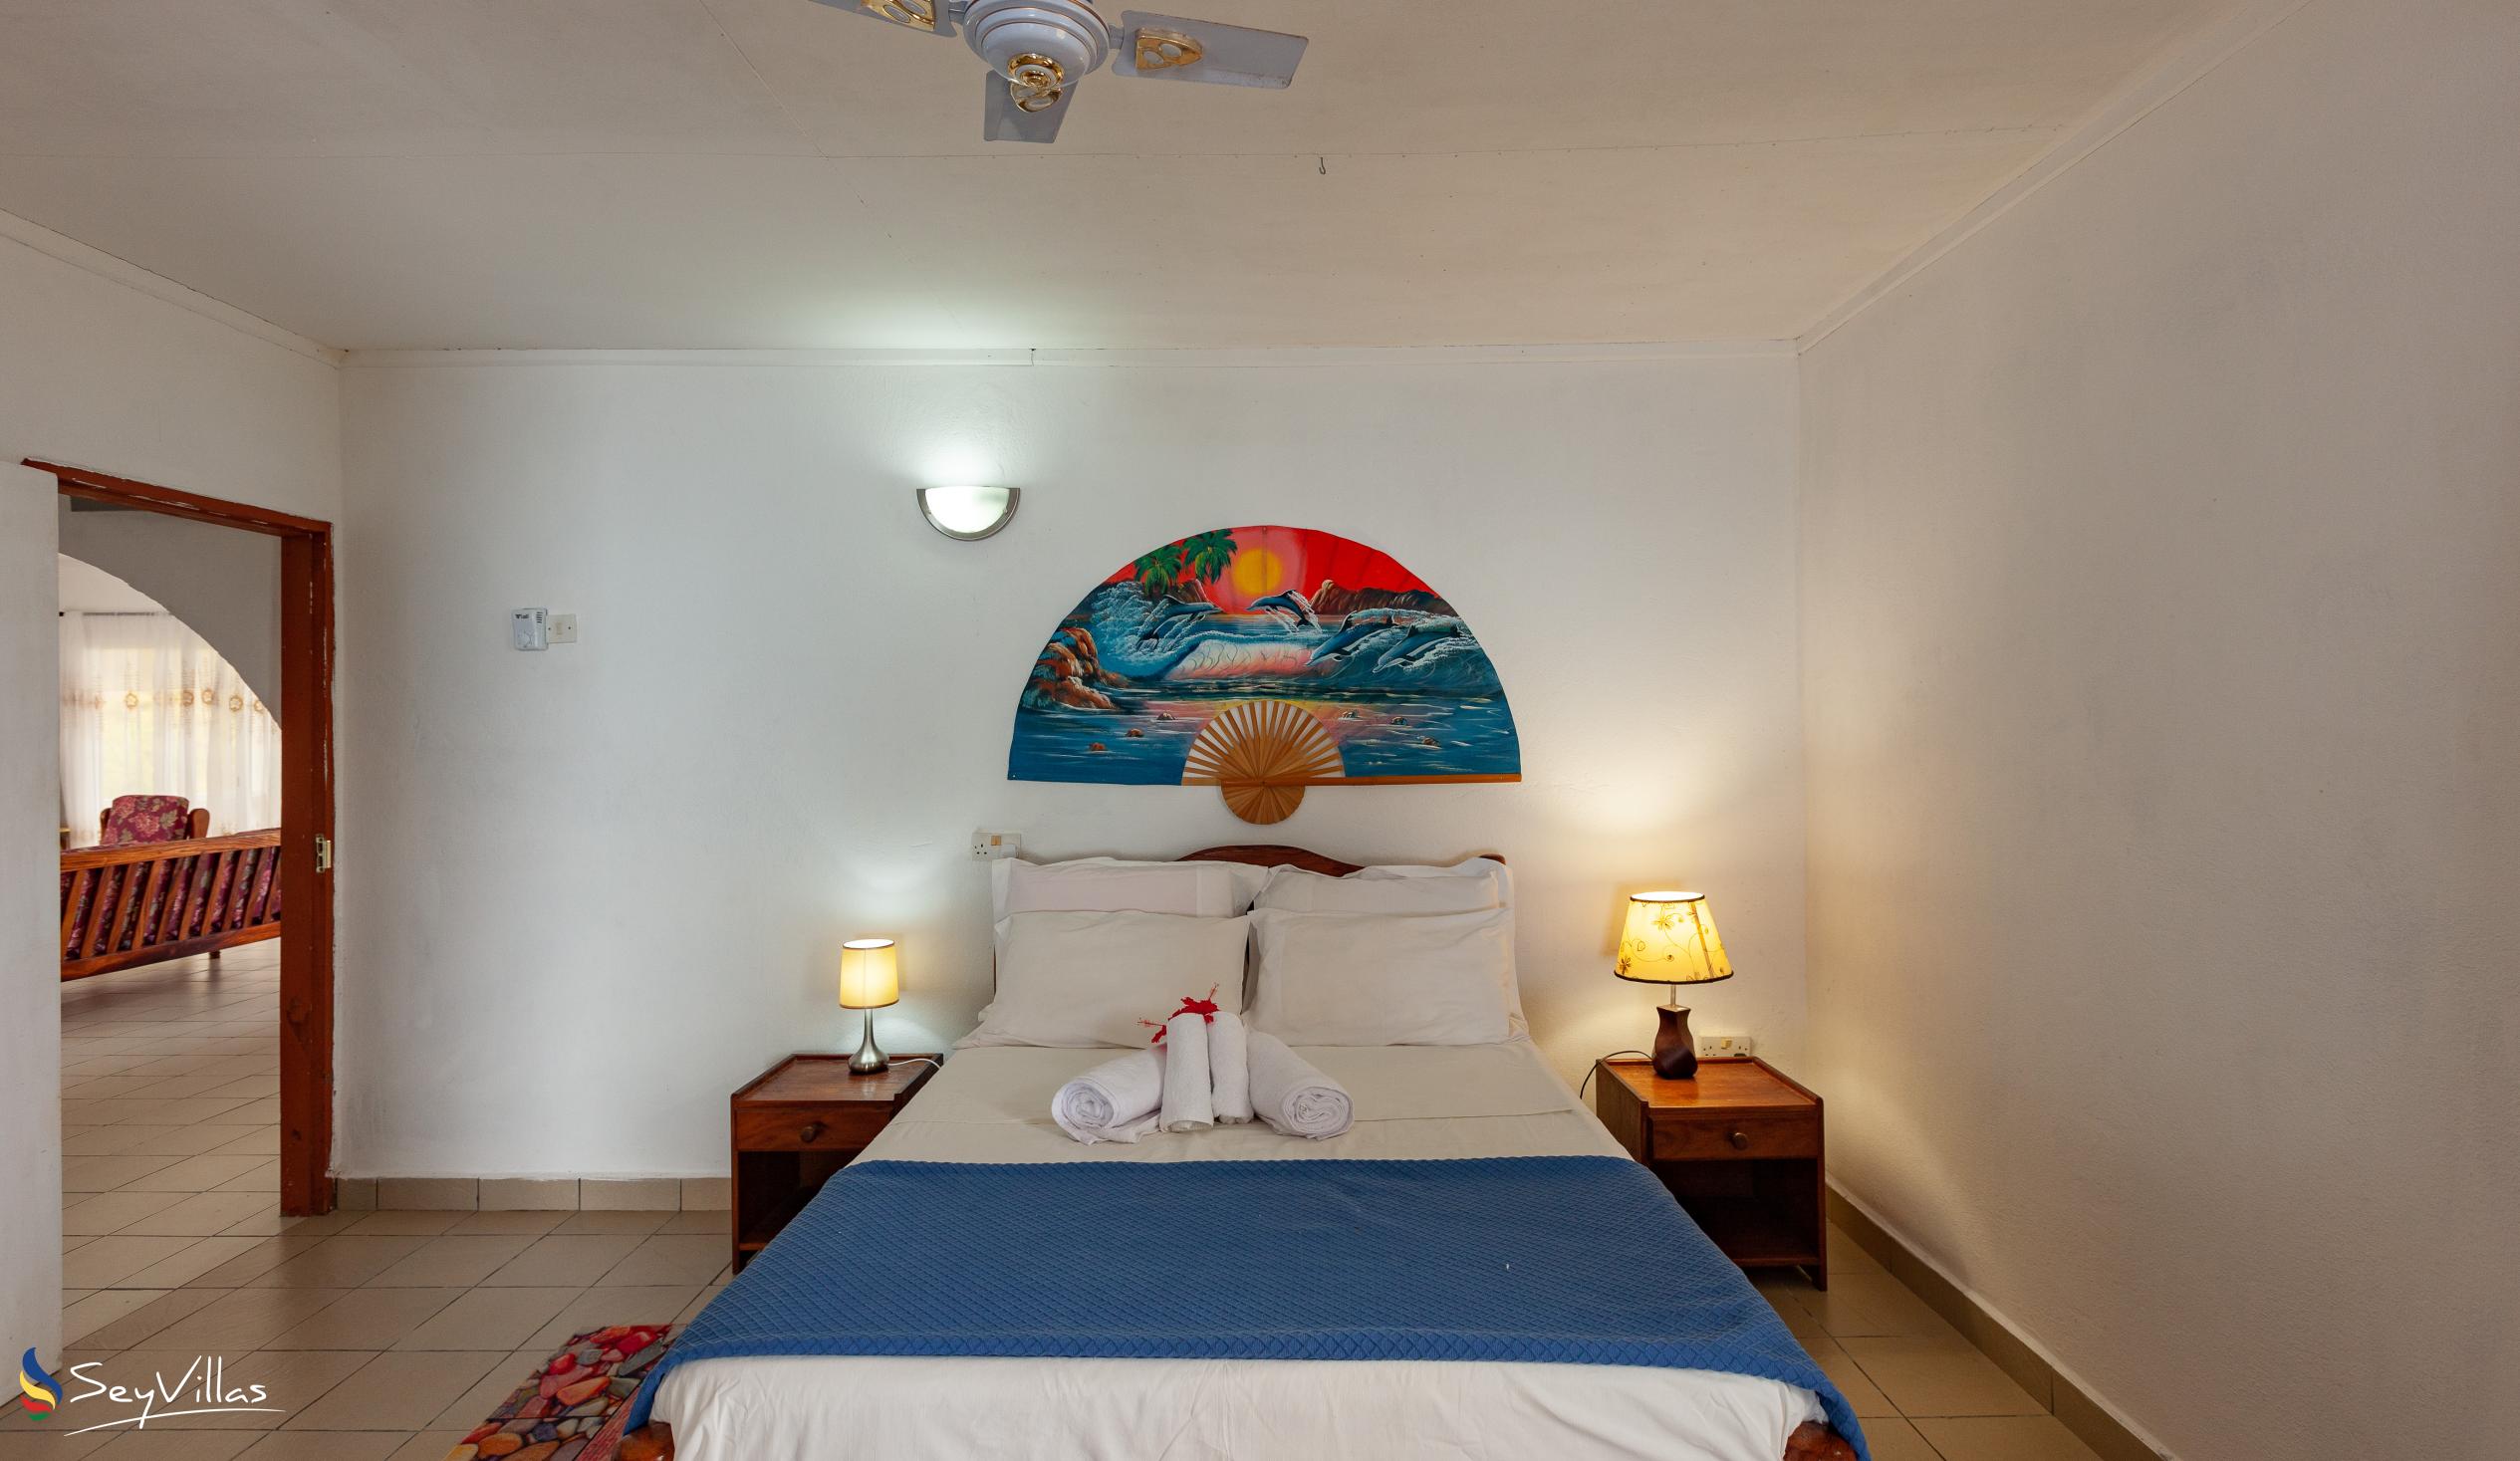 Photo 53: Maison du Soleil - 2-Bedroom Villa - Praslin (Seychelles)